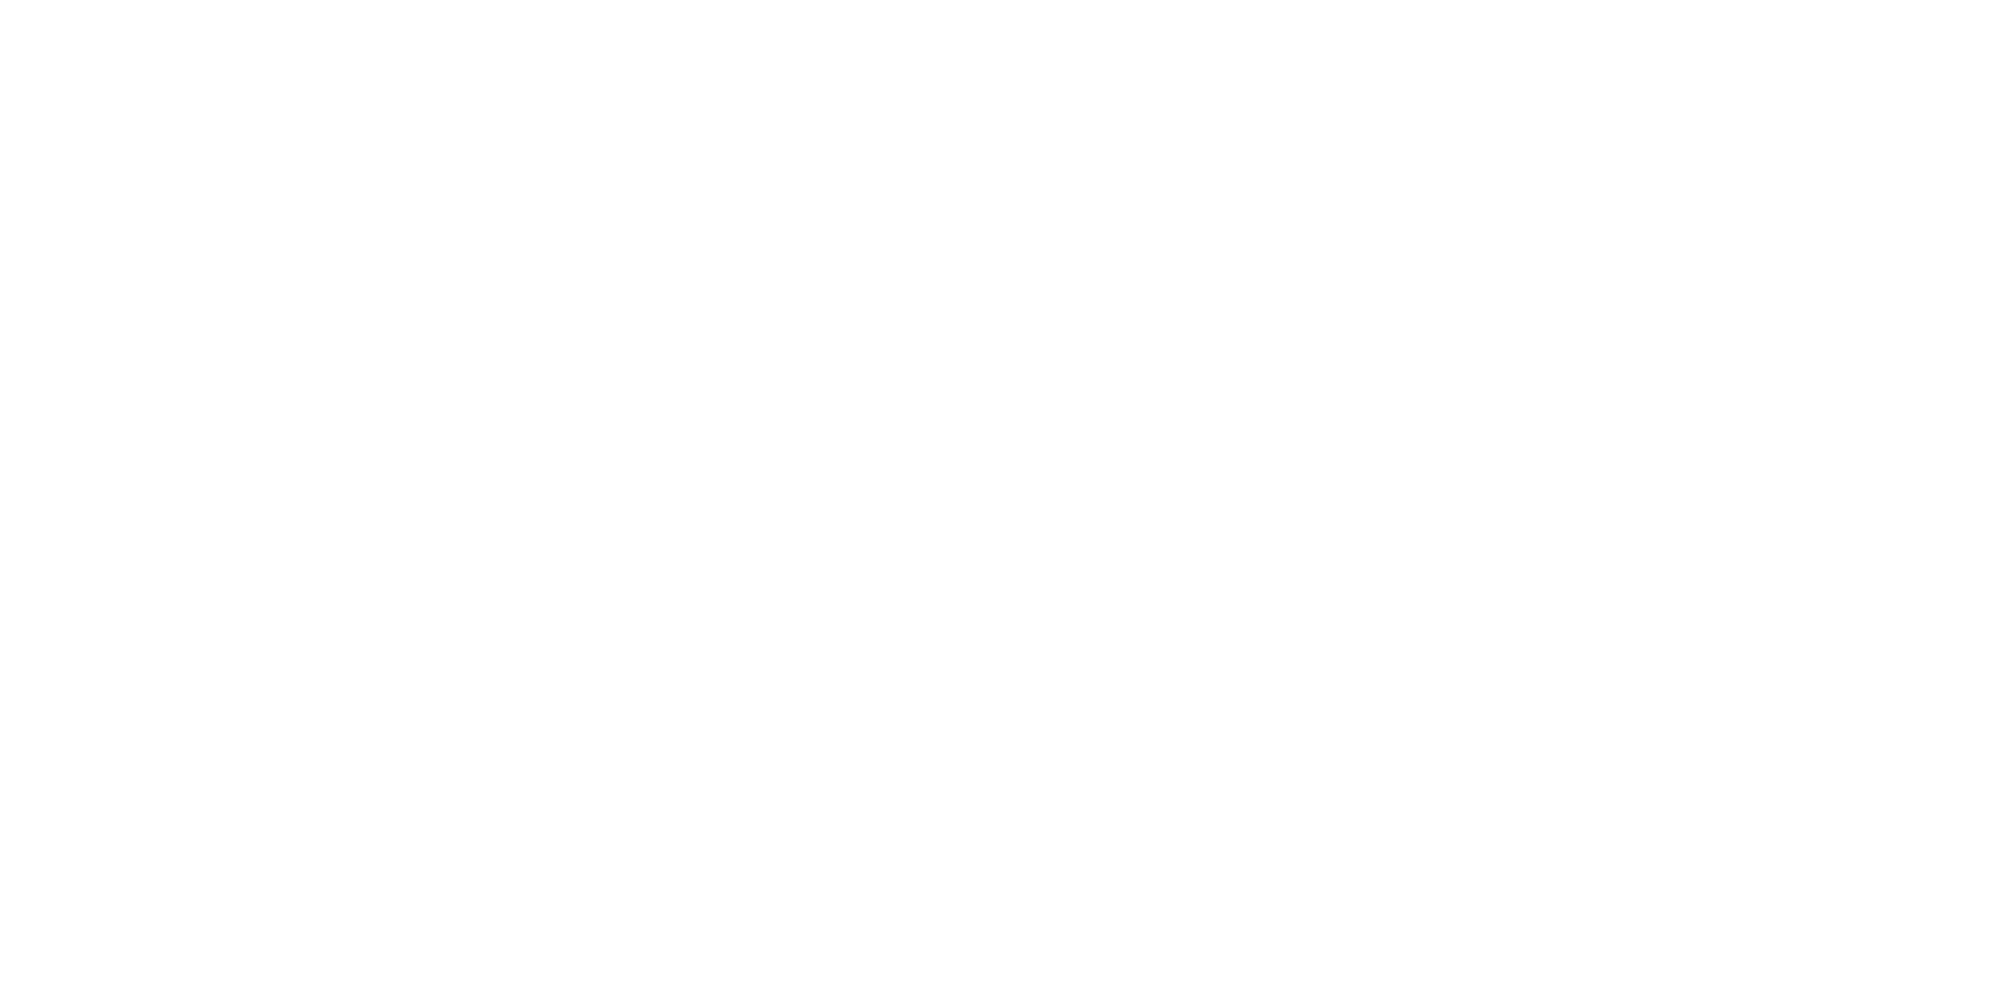 The Urban Construction